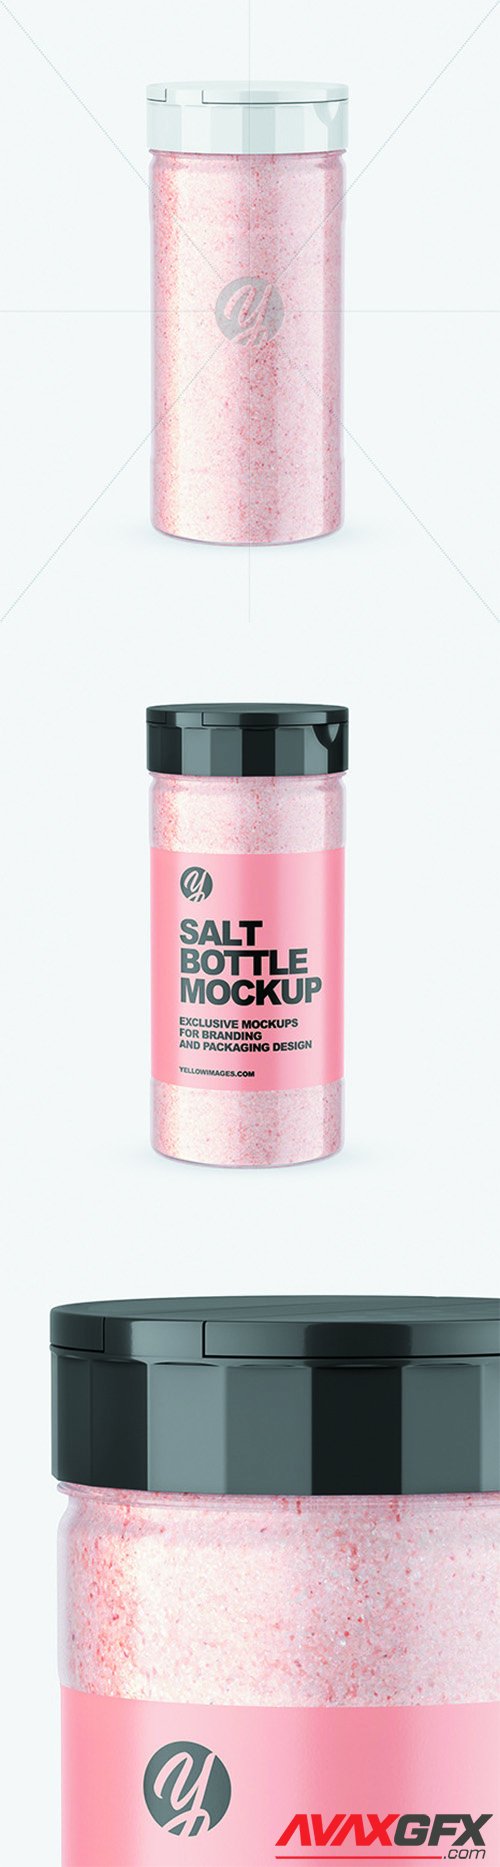 Glossy Clear Jar with Pink Salt Mockup 68701